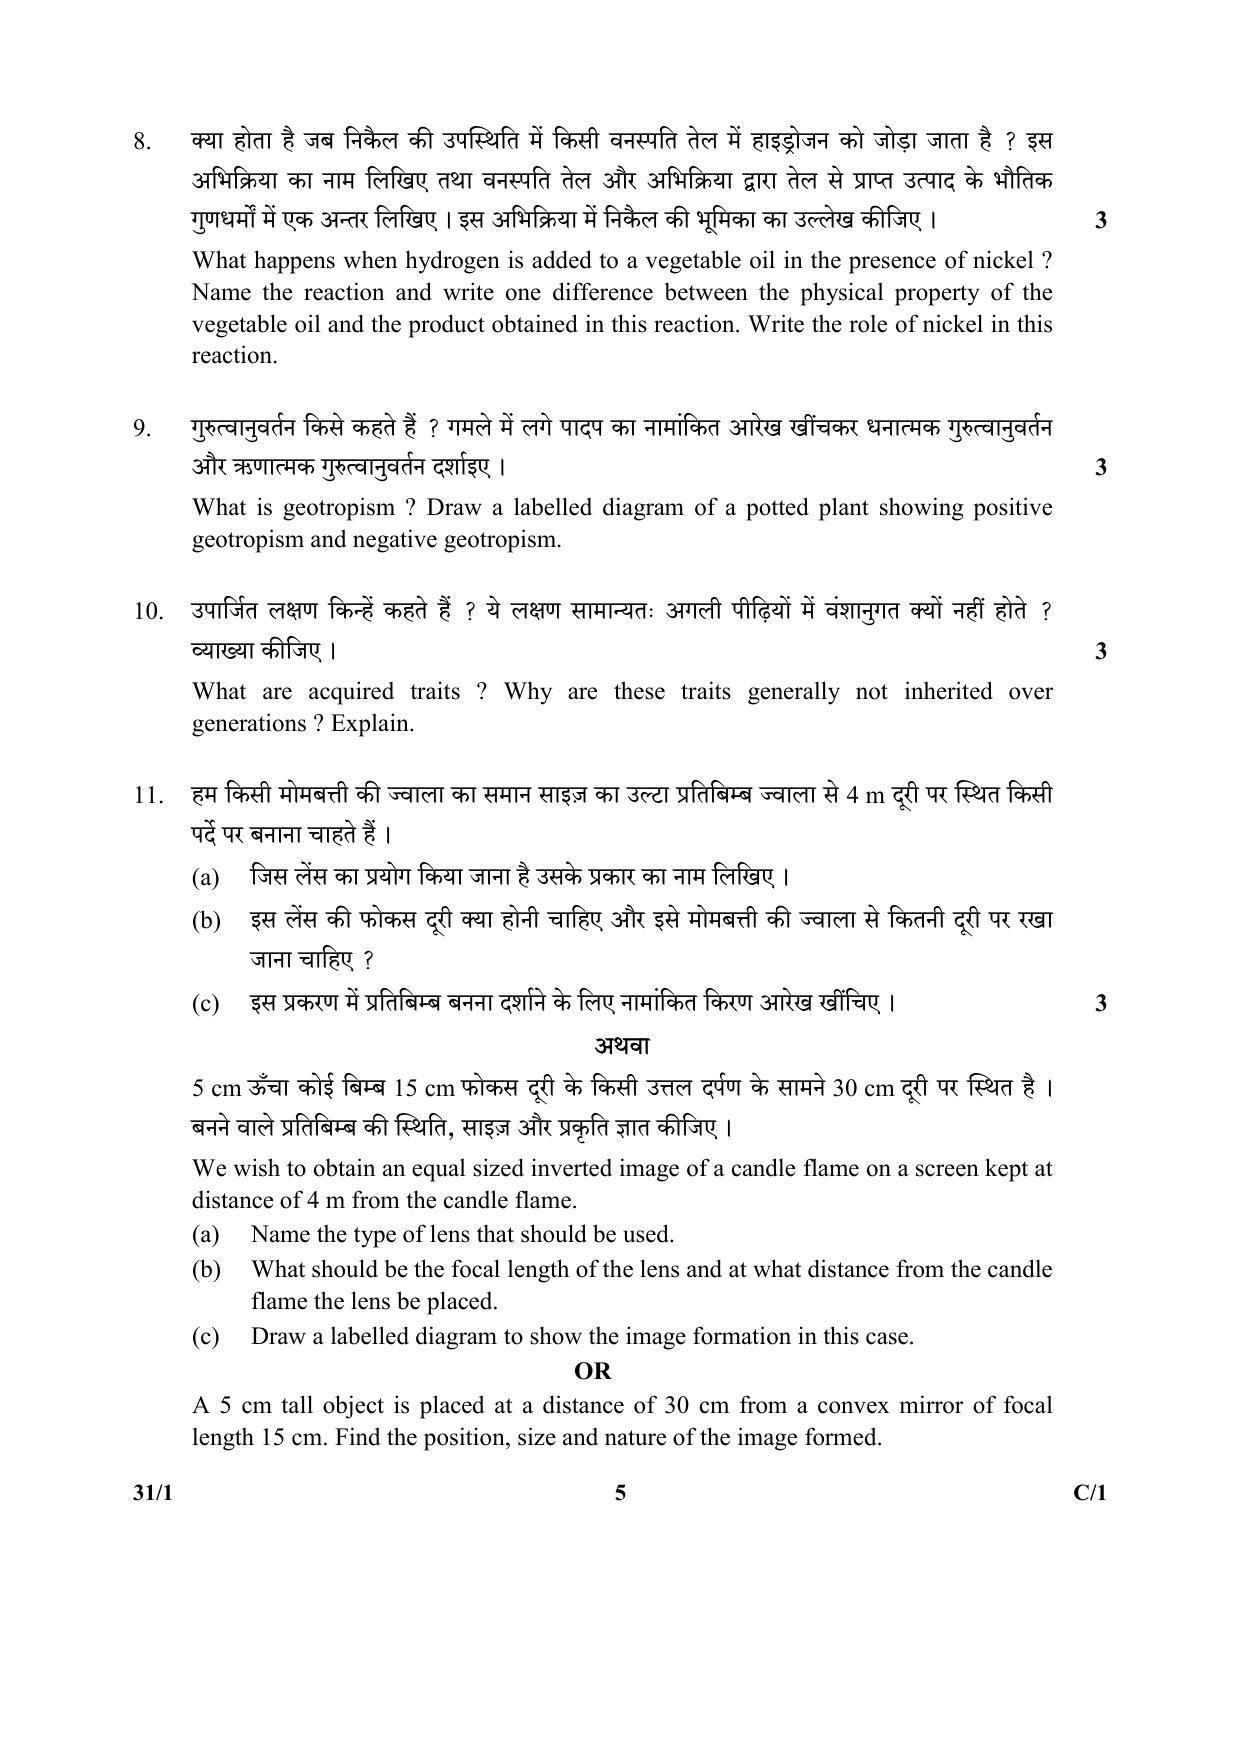 CBSE Class 10 41-1 Science PUNJABI VERSION 2018 Compartment Question Paper - Page 13